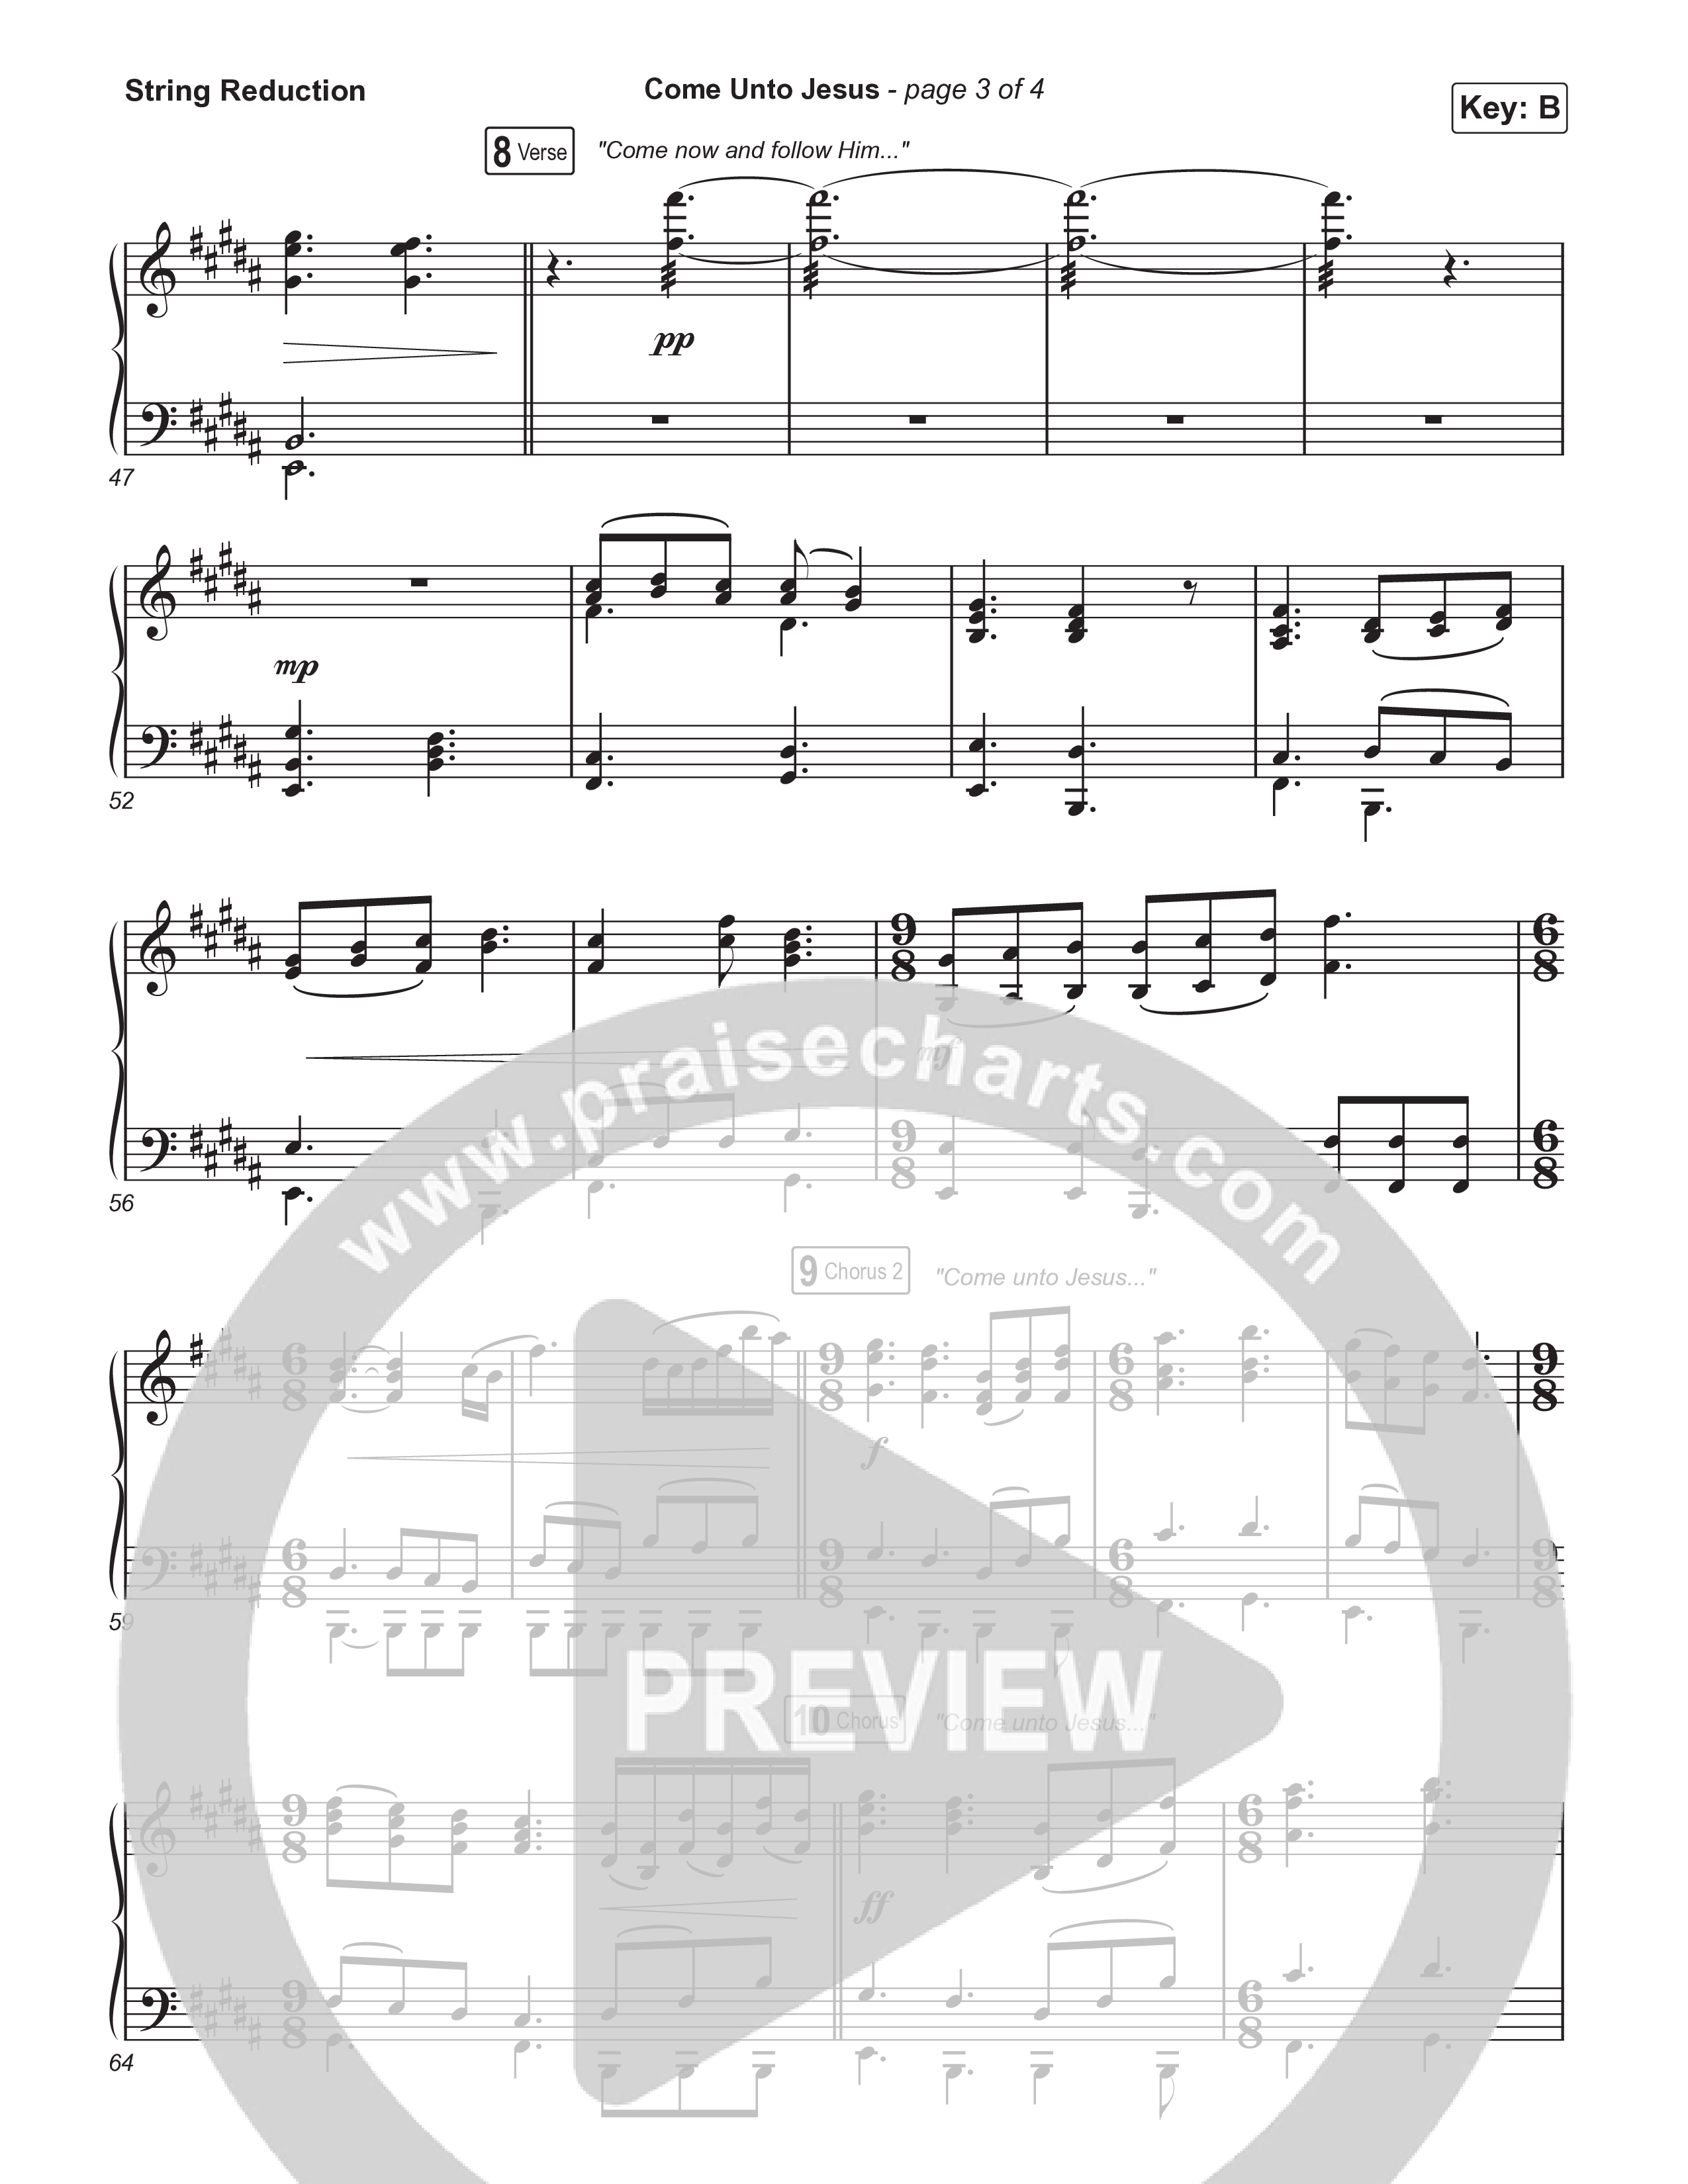 Come Unto Jesus (Choral Anthem SATB) String Reduction (Keith & Kristyn Getty / Laura Story / Jordan Kauflin / Arr. Luke Gambill)